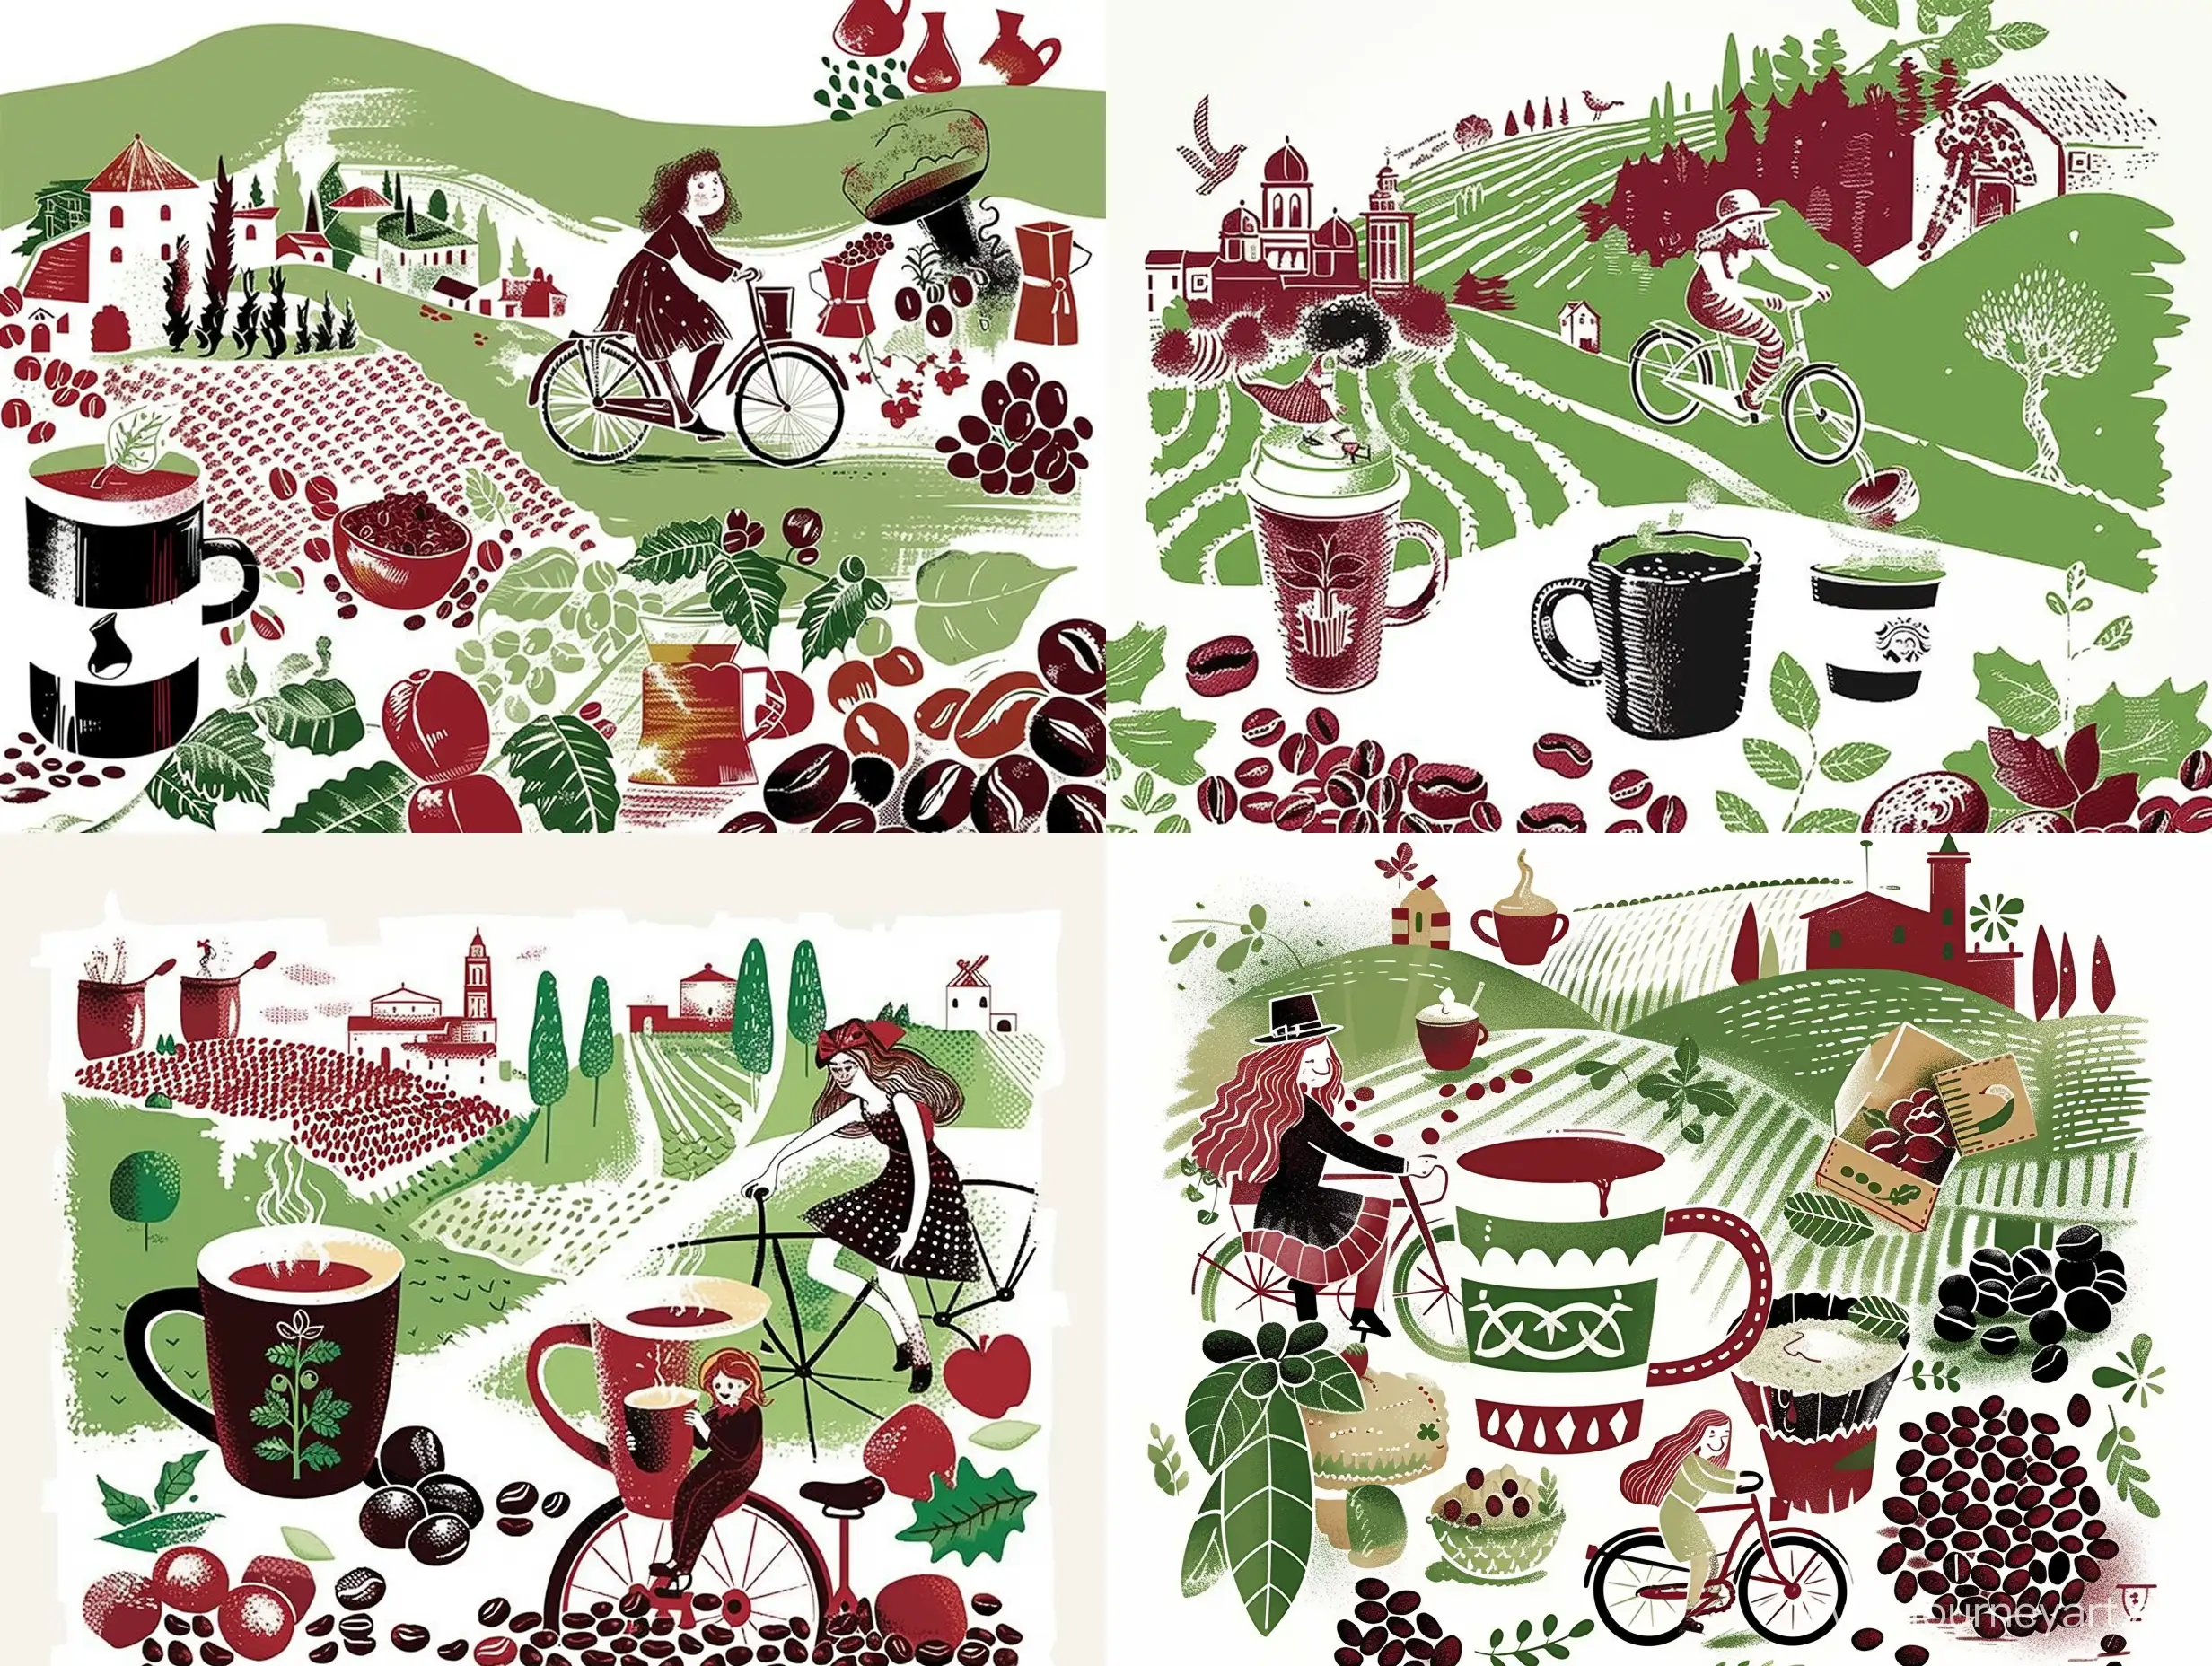 Italian-Coffee-Culture-Girl-Cycling-with-Coffee-Mug-in-AvantGarde-Illustration